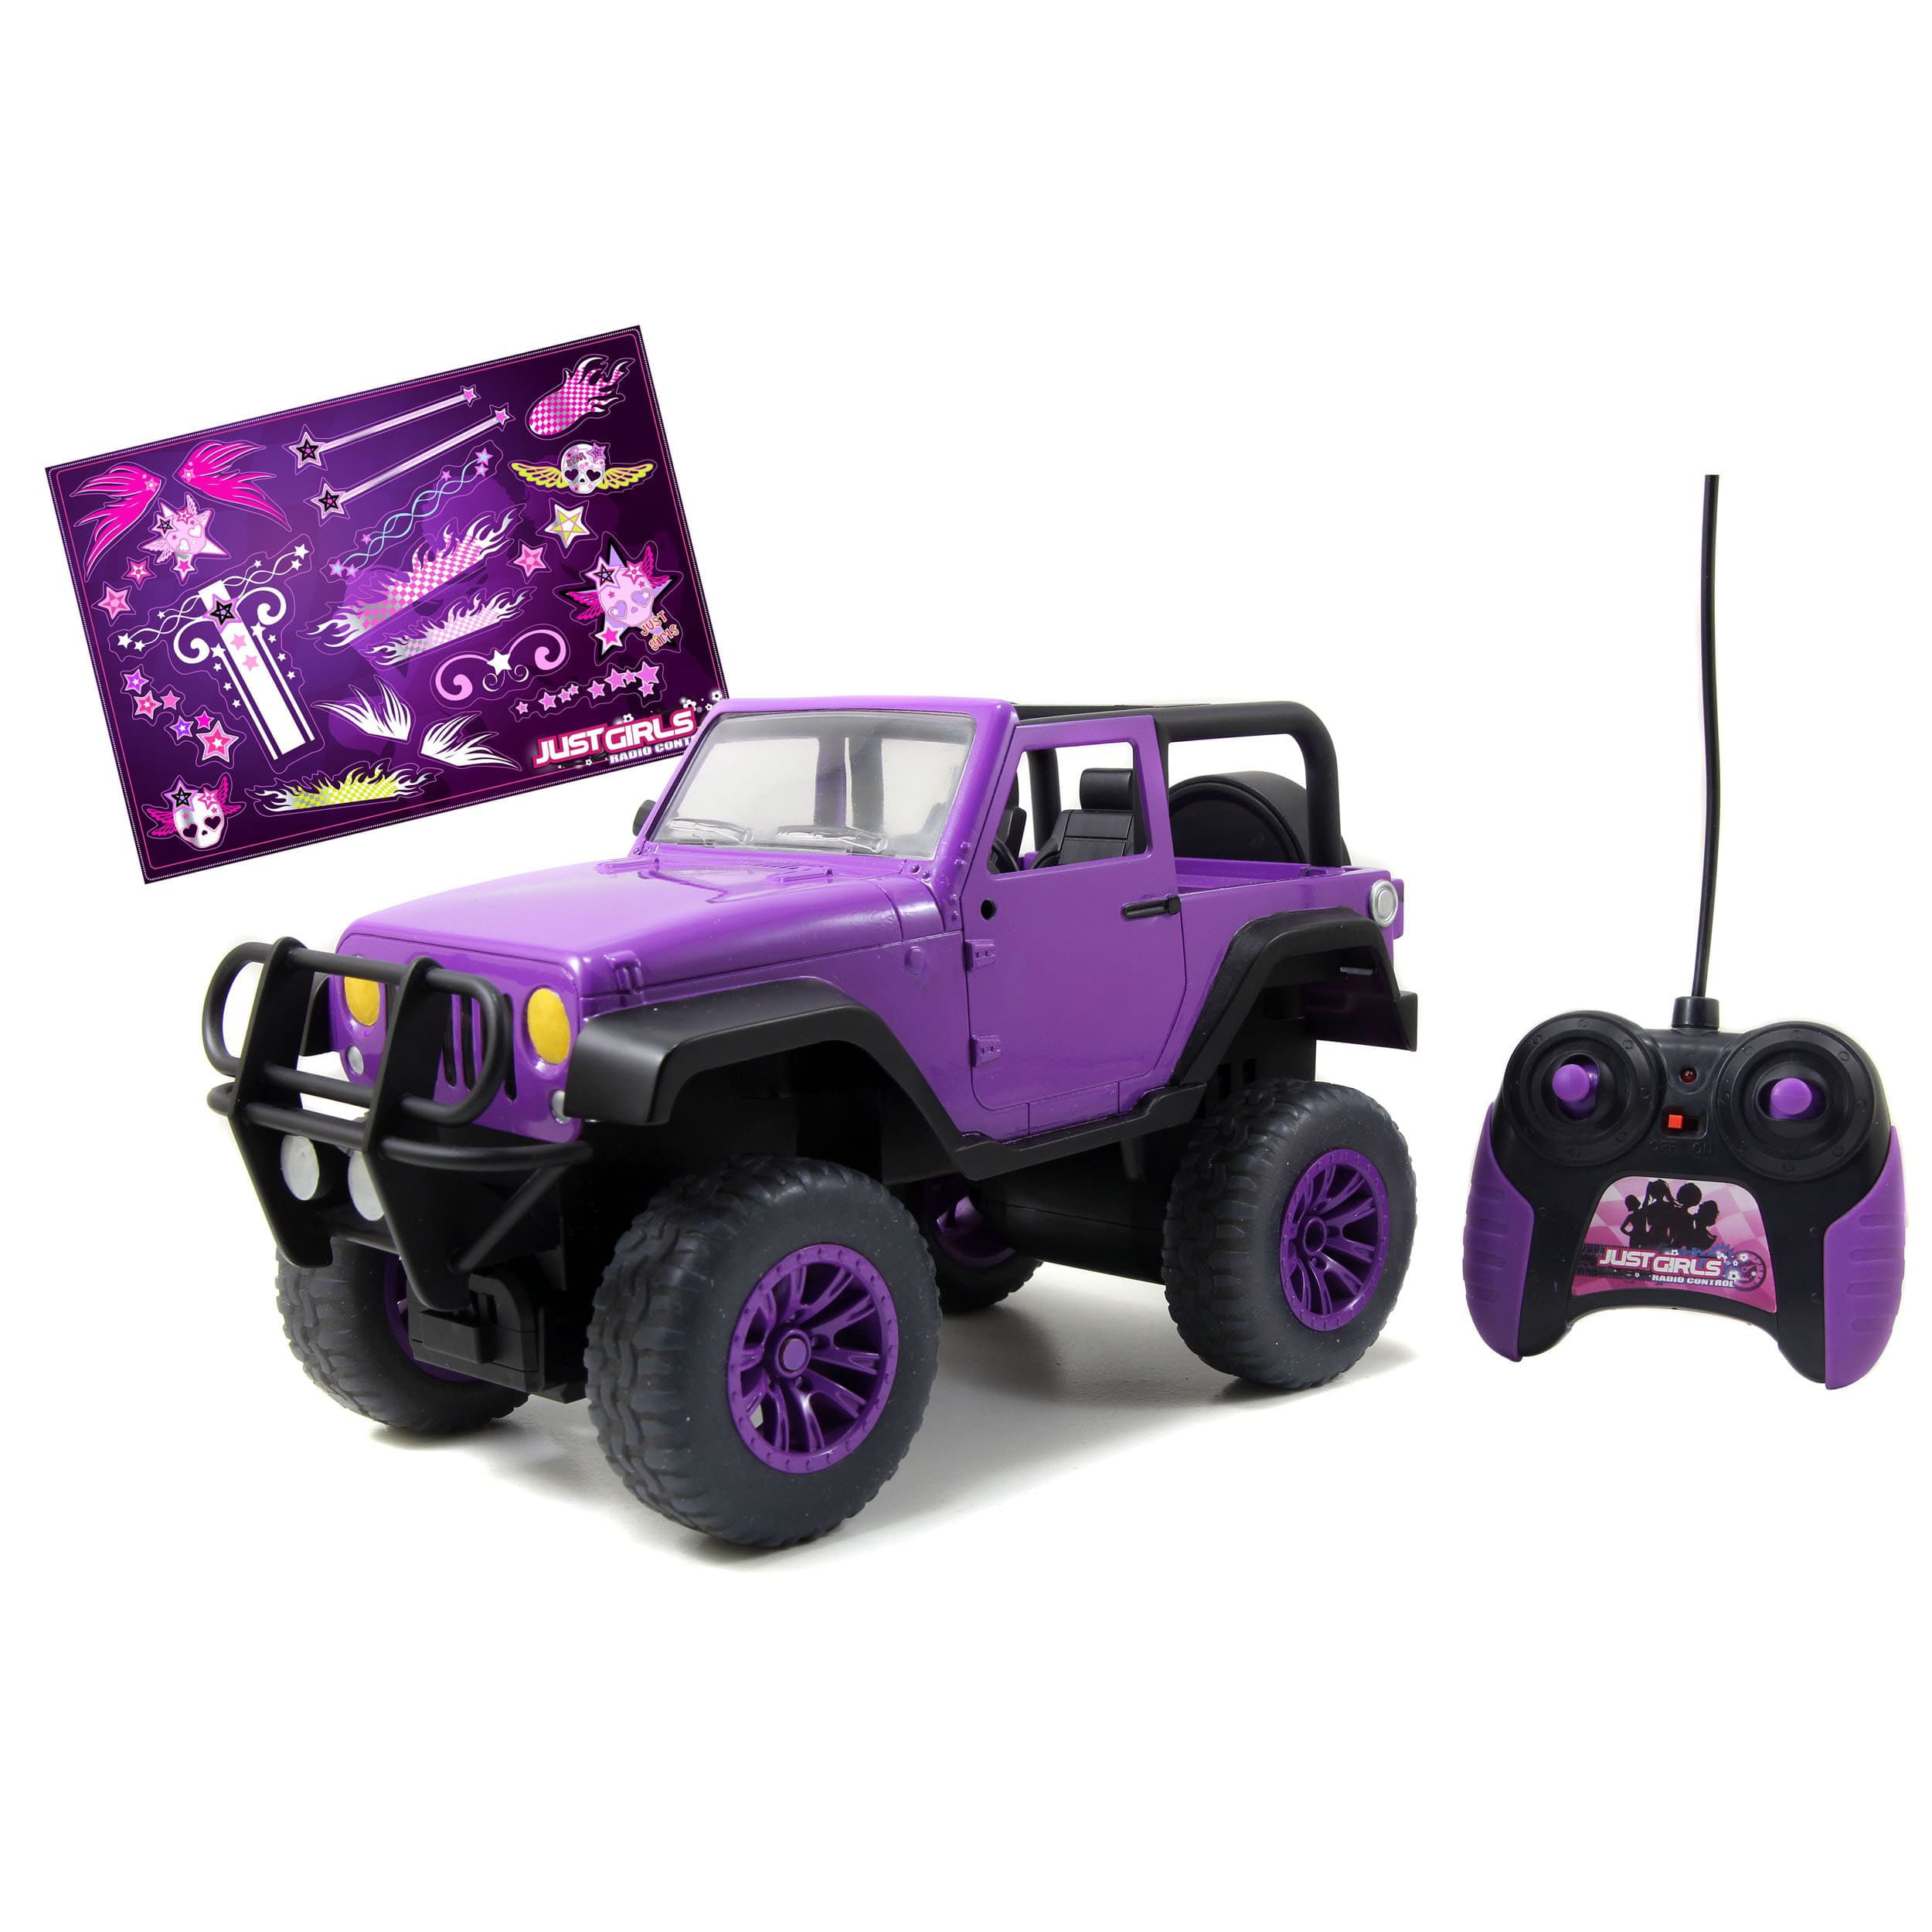 Jada Toys Girlmazing Remote Control Big Foot Jeep Walmart Com Walmart Com